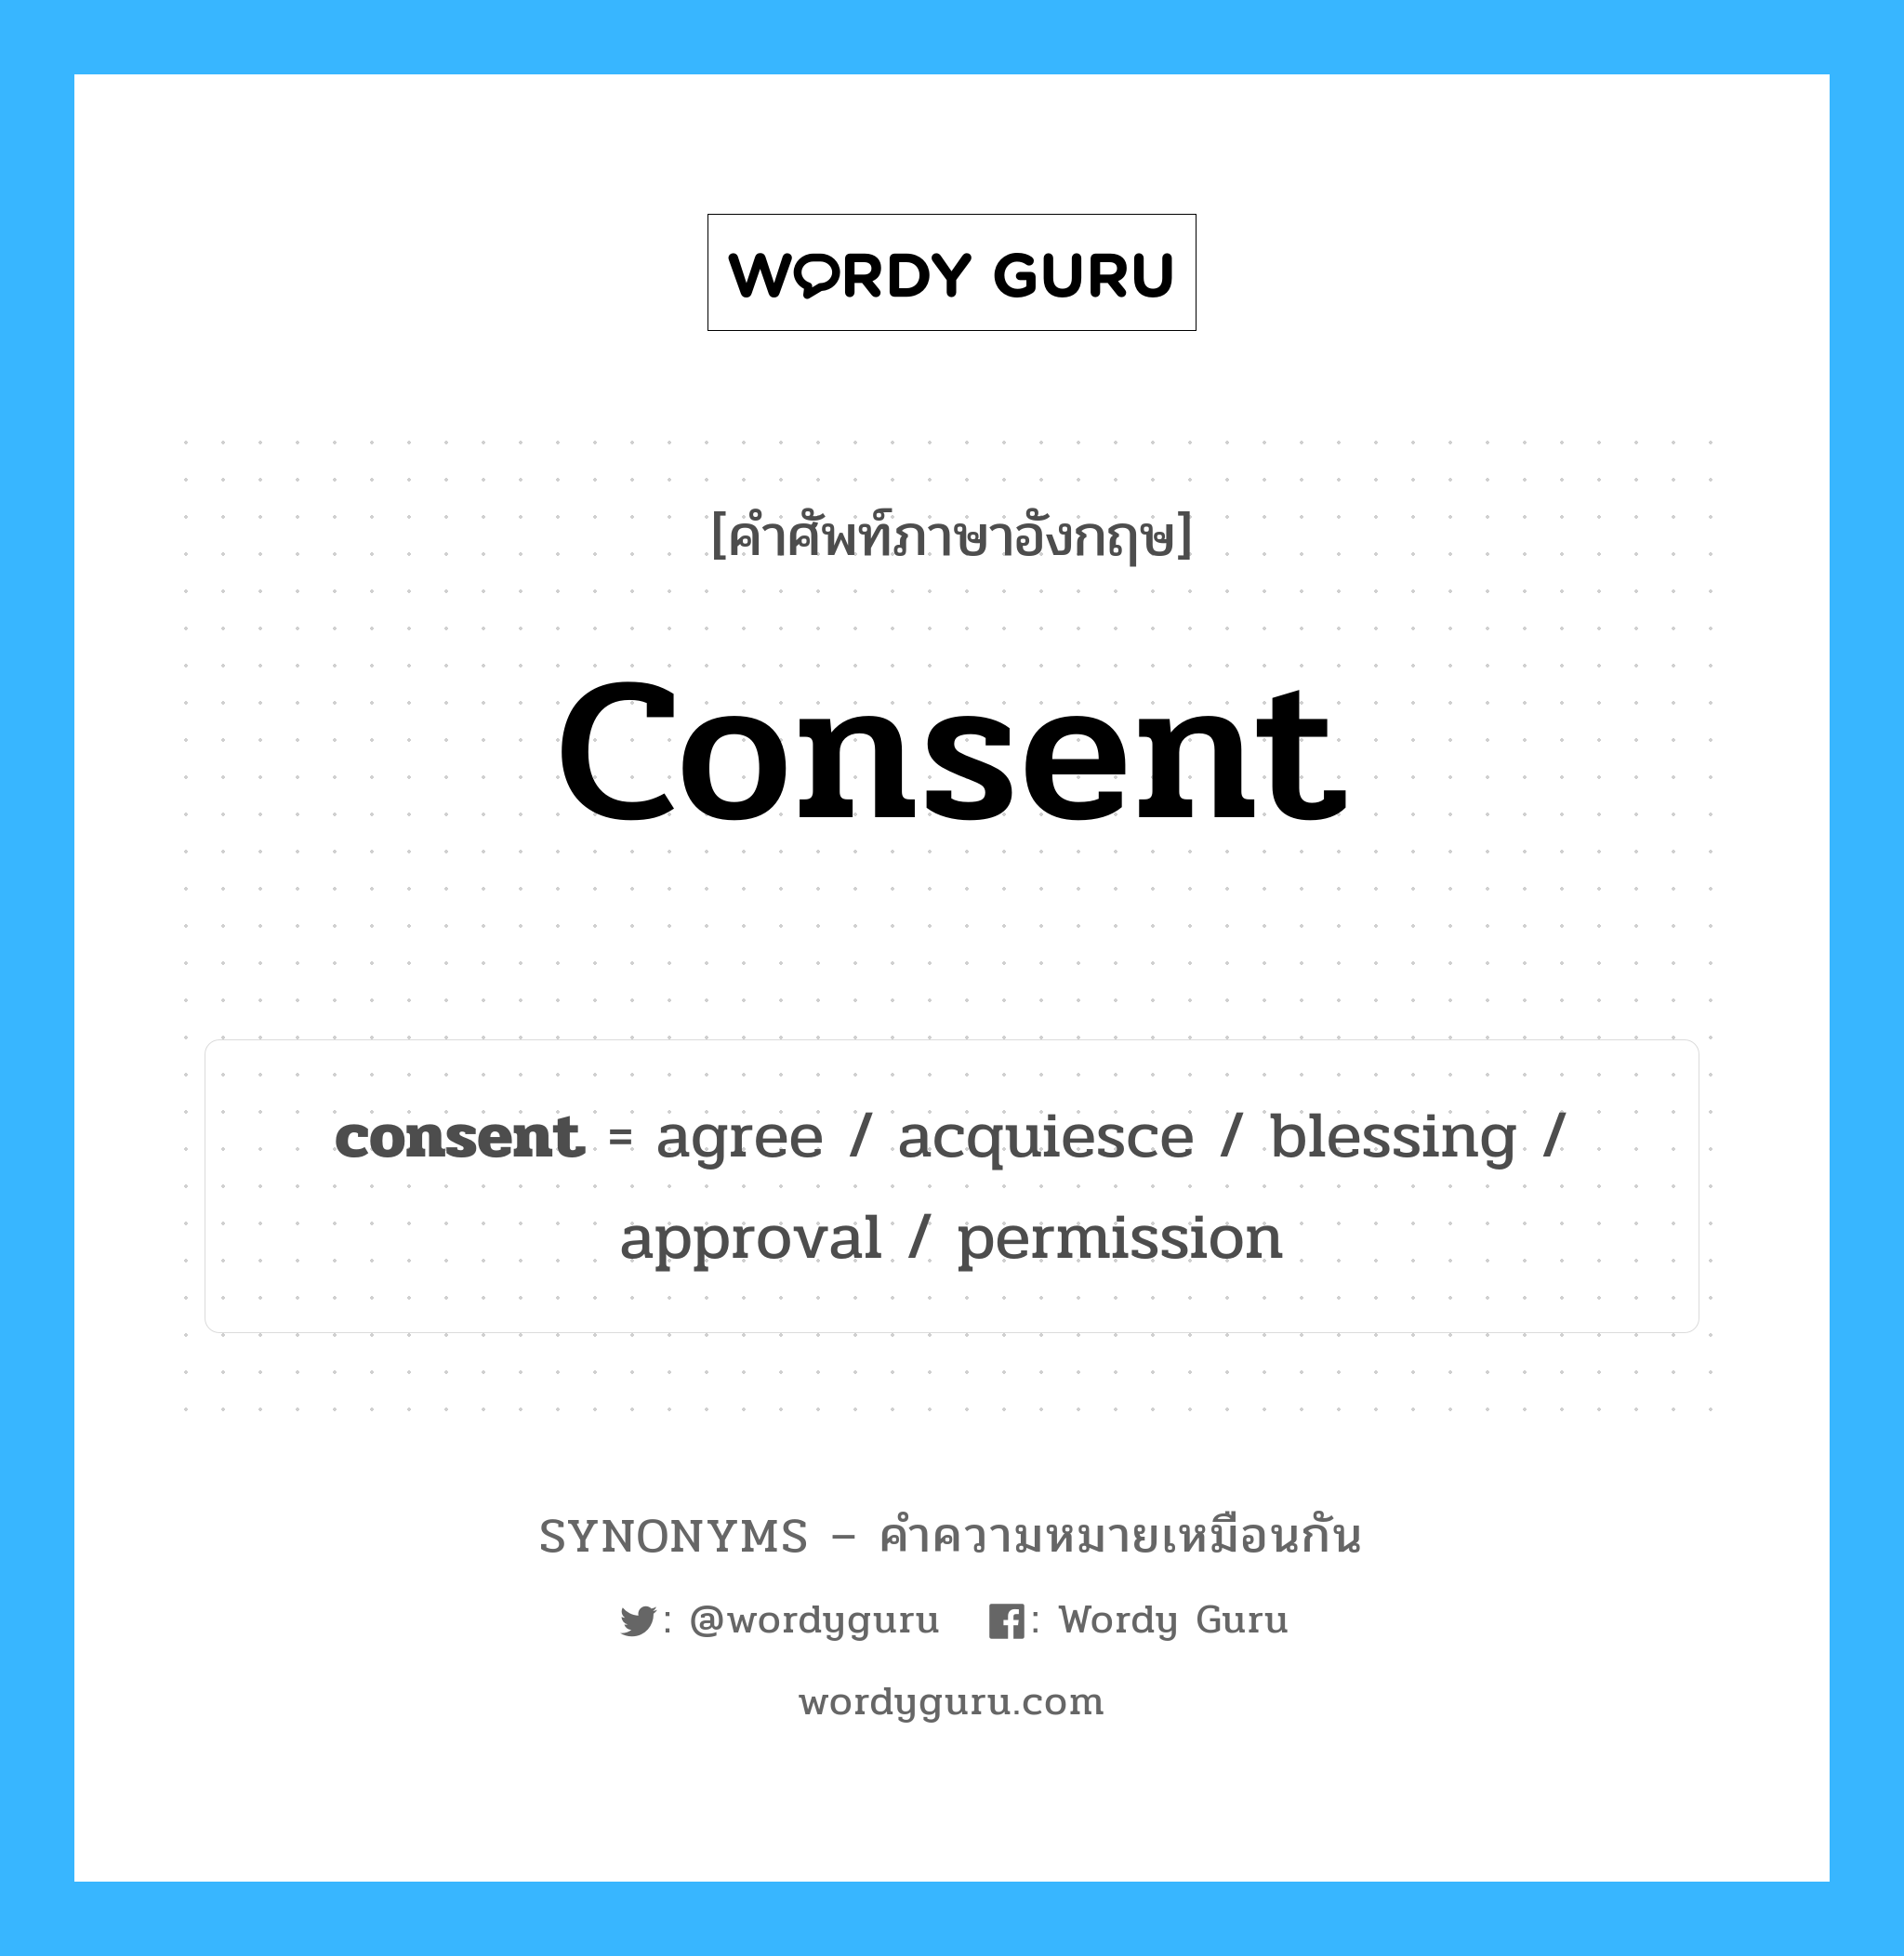 permission เป็นหนึ่งใน consent และมีคำอื่น ๆ อีกดังนี้, คำศัพท์ภาษาอังกฤษ permission ความหมายคล้ายกันกับ consent แปลว่า อนุญาต หมวด consent